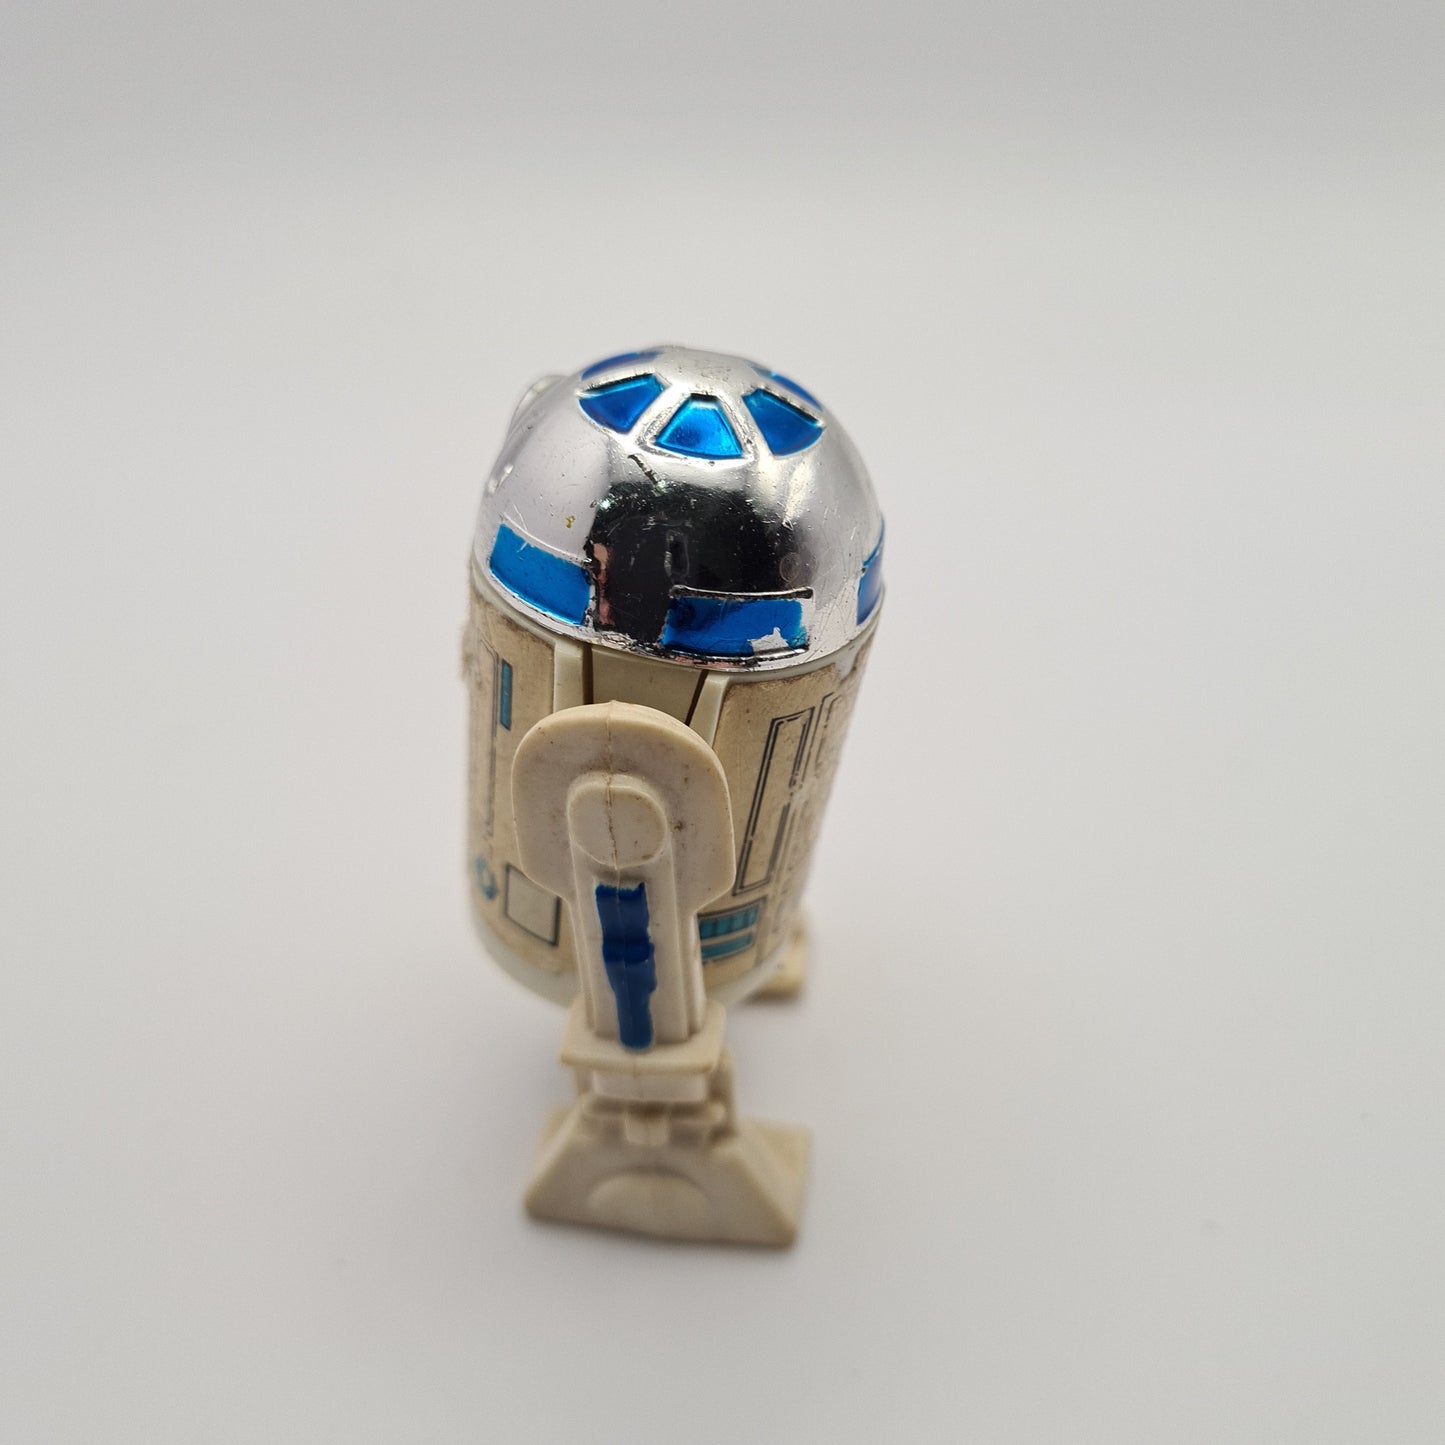 R2-D2 Star Wars Action Figure 1977